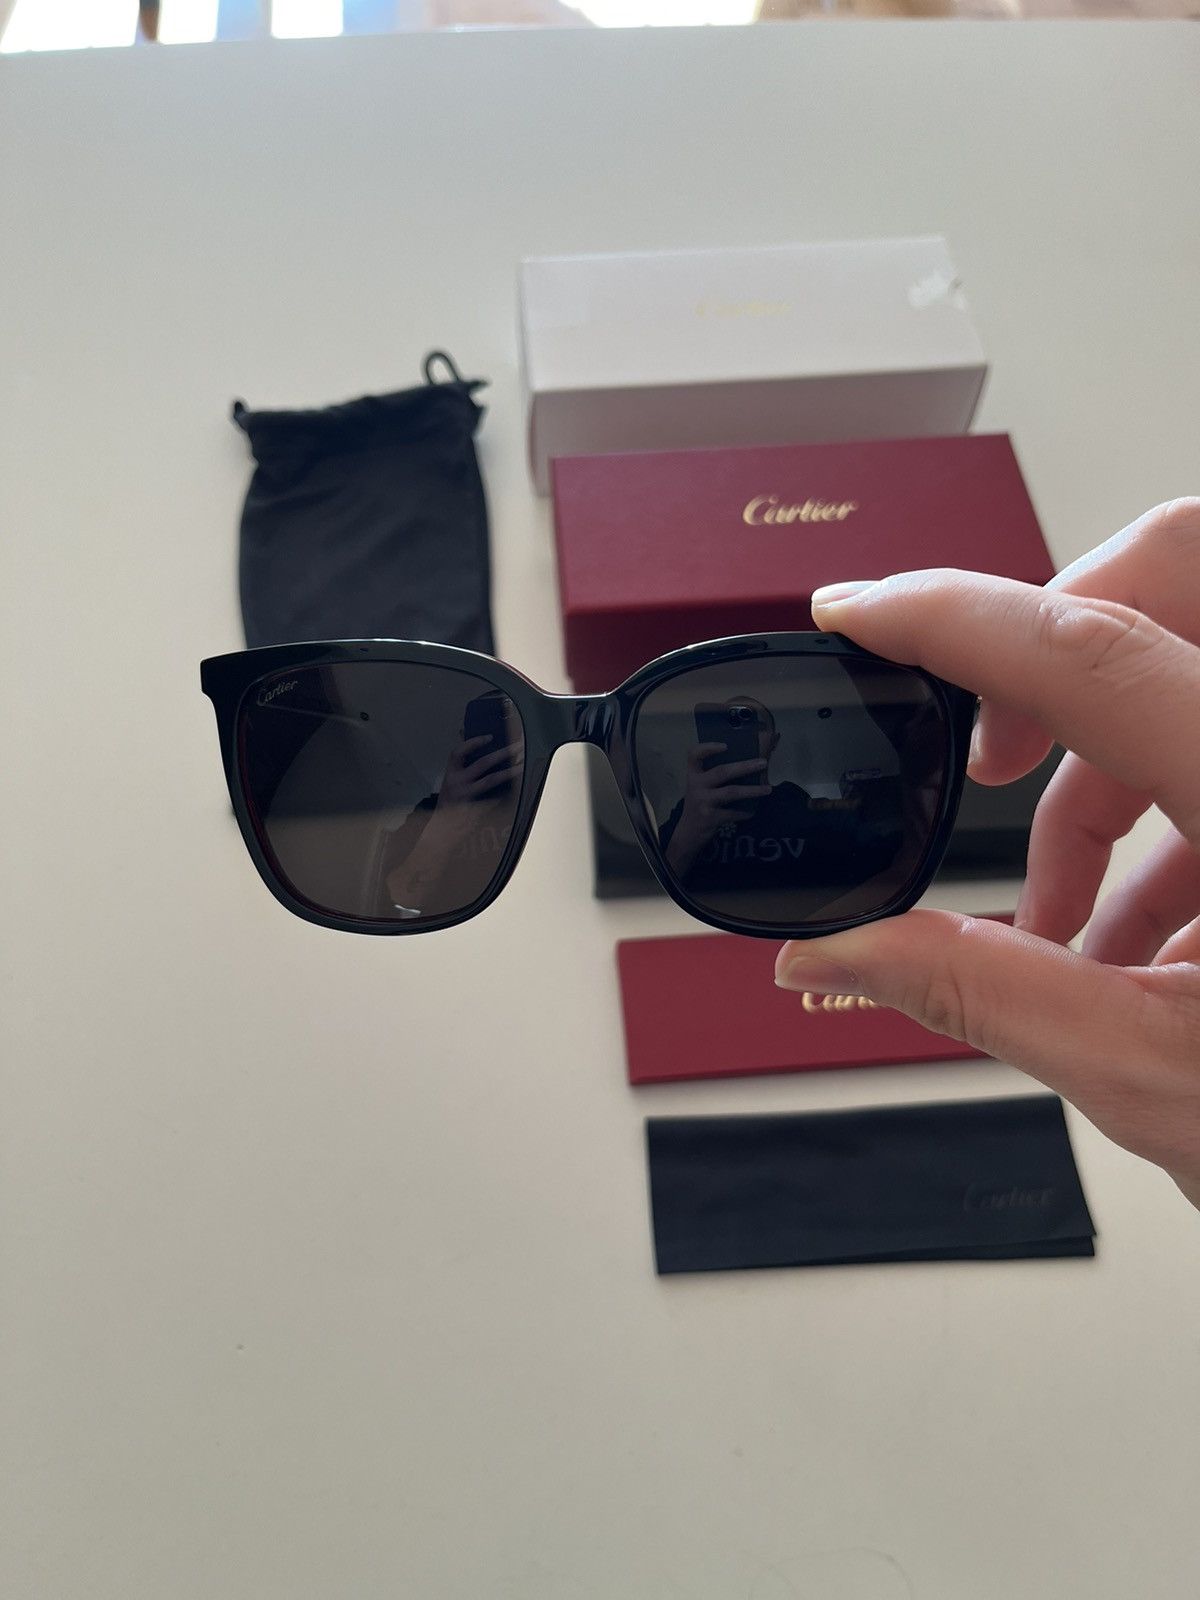 NIB - Cartier Black and Red Acetate Sunglasses - 2